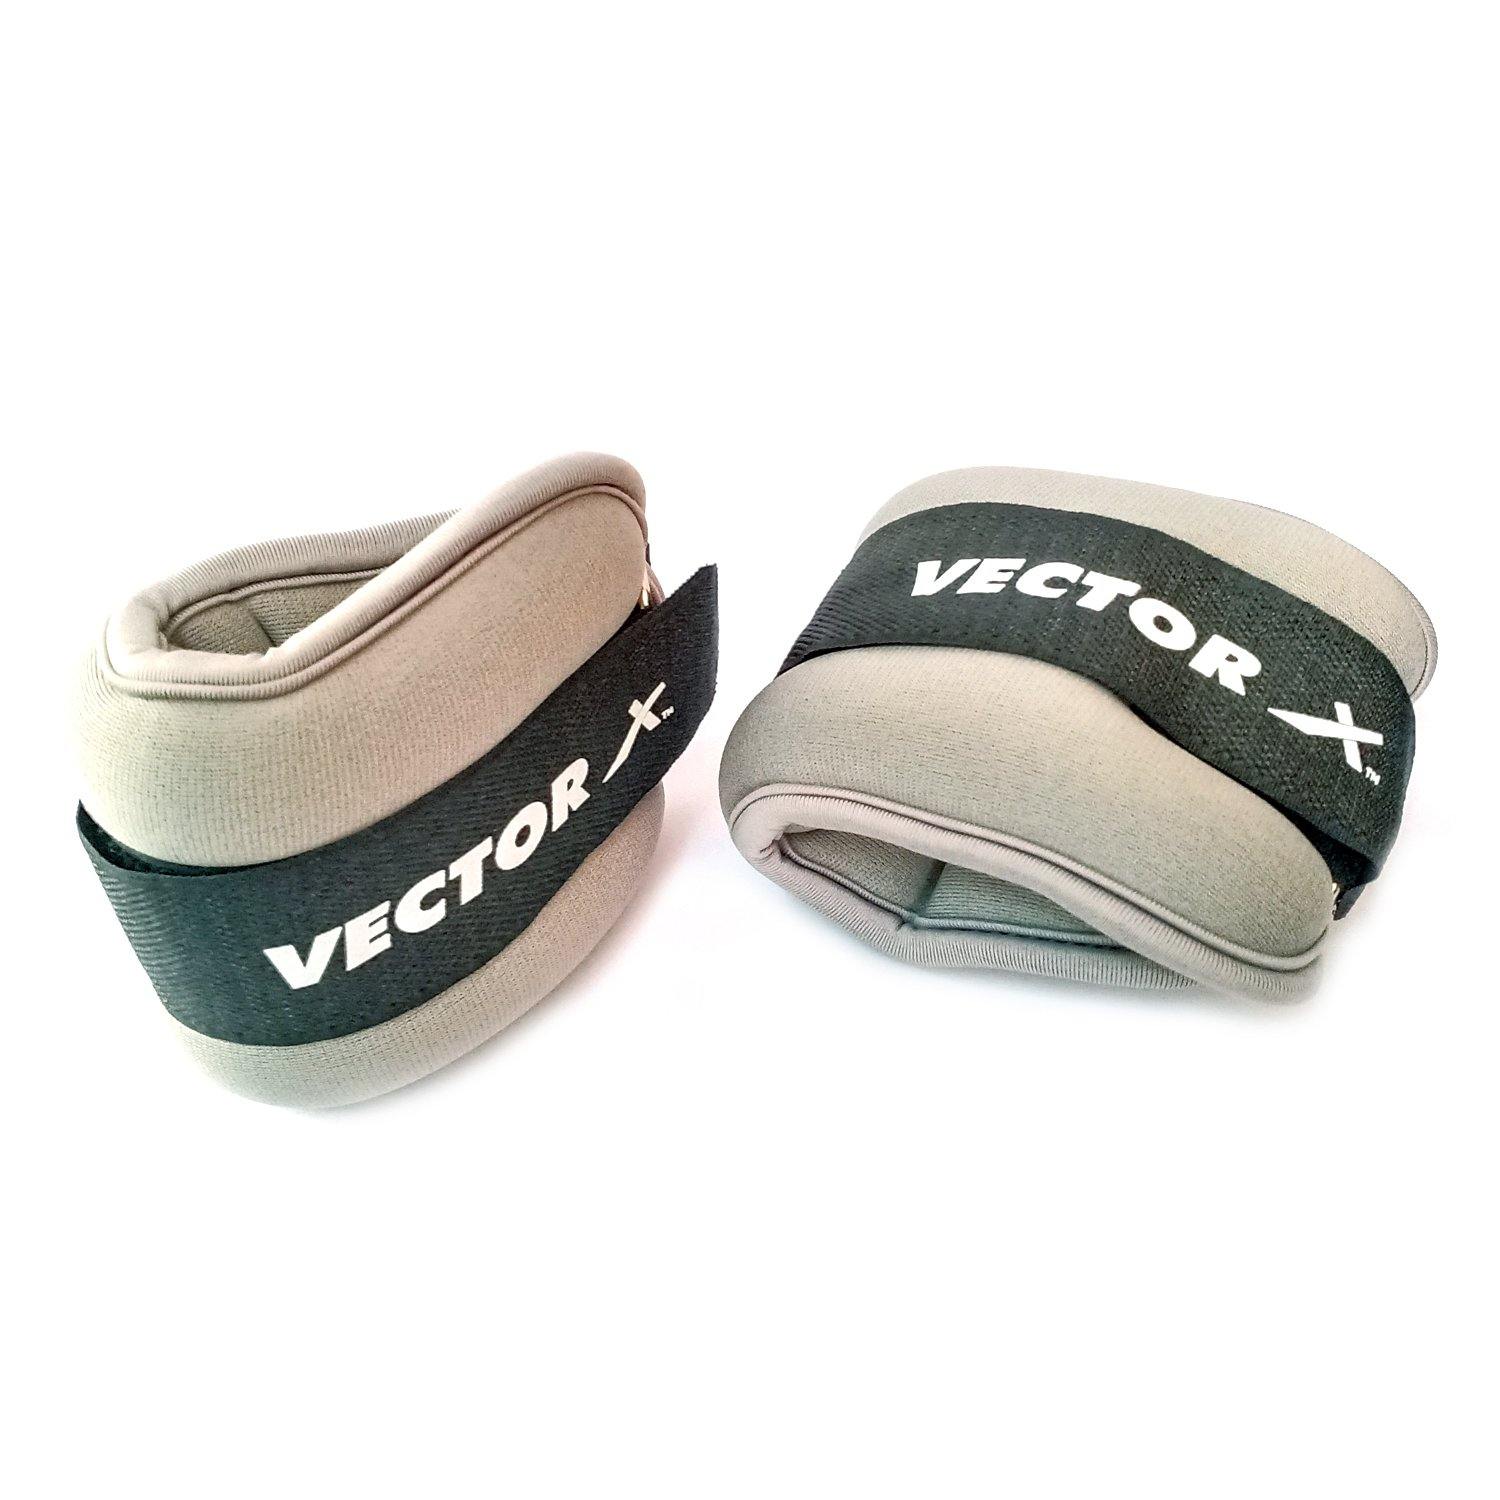 Vector X AW20 Ankle/Wrist Weights - Best Price online Prokicksports.com